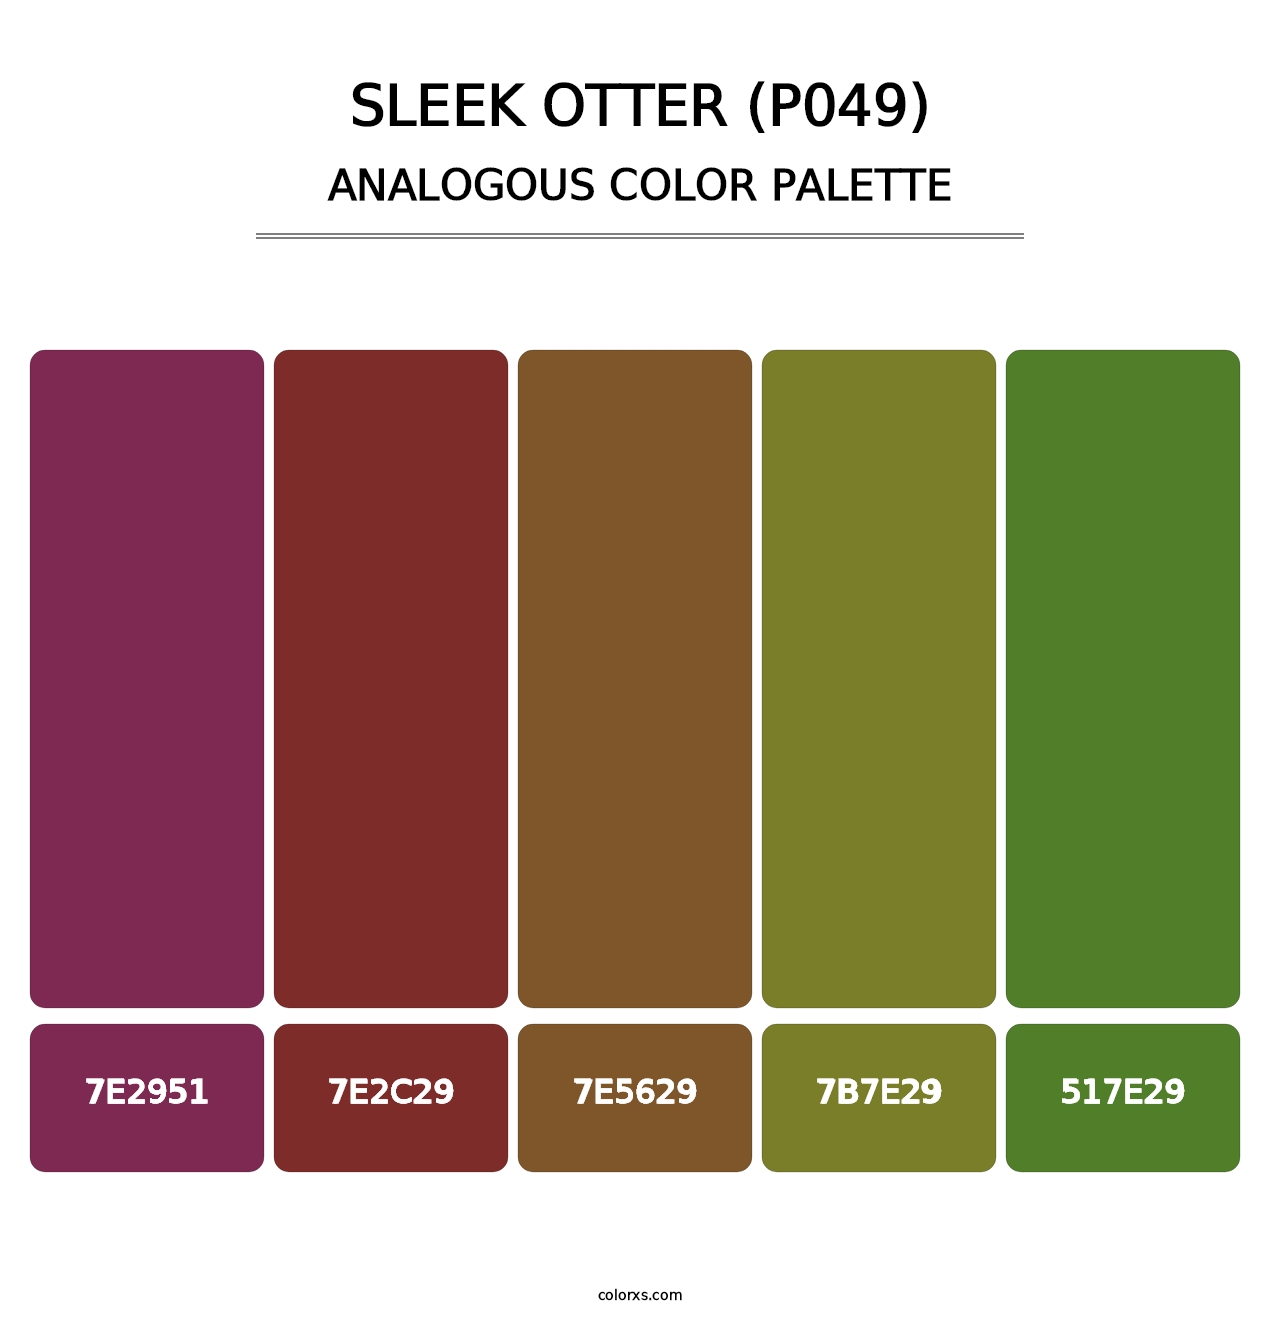 Sleek Otter (P049) - Analogous Color Palette